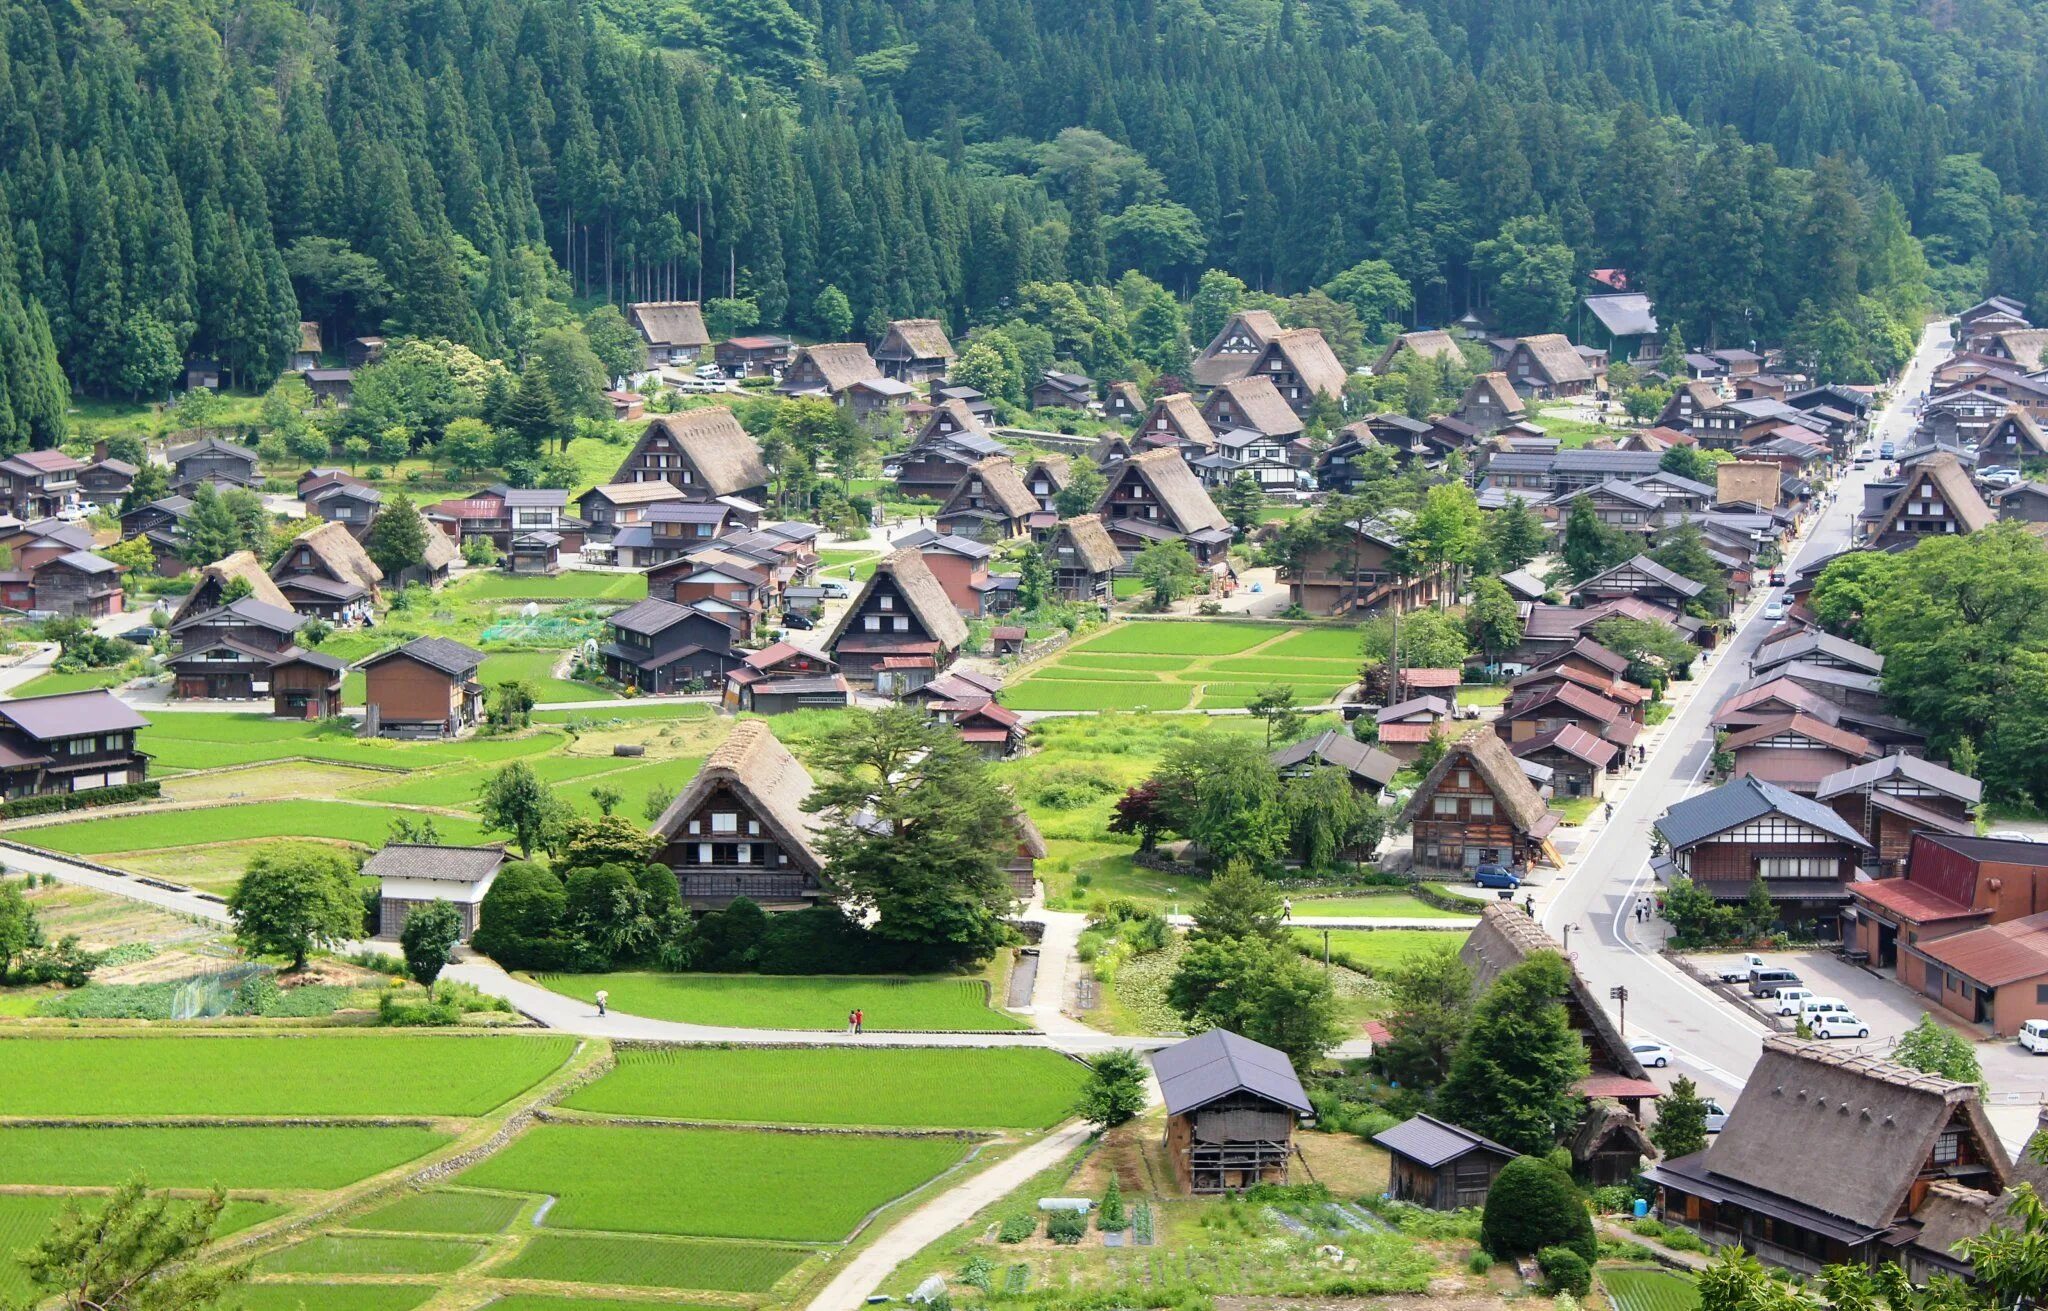 Г деревне. Японская деревня Сиракава летом. Деревня Ёнаки Япония. Храм деревни Сиракава. Современная деревня.